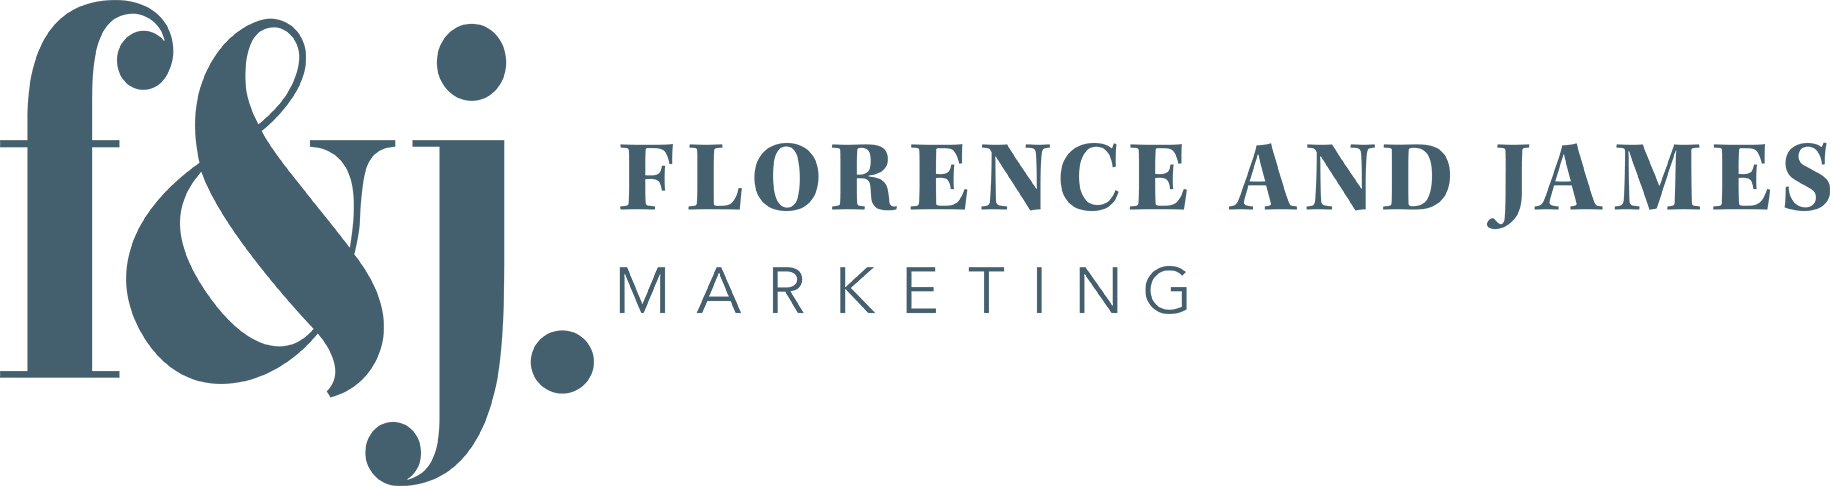 Florence & James logo